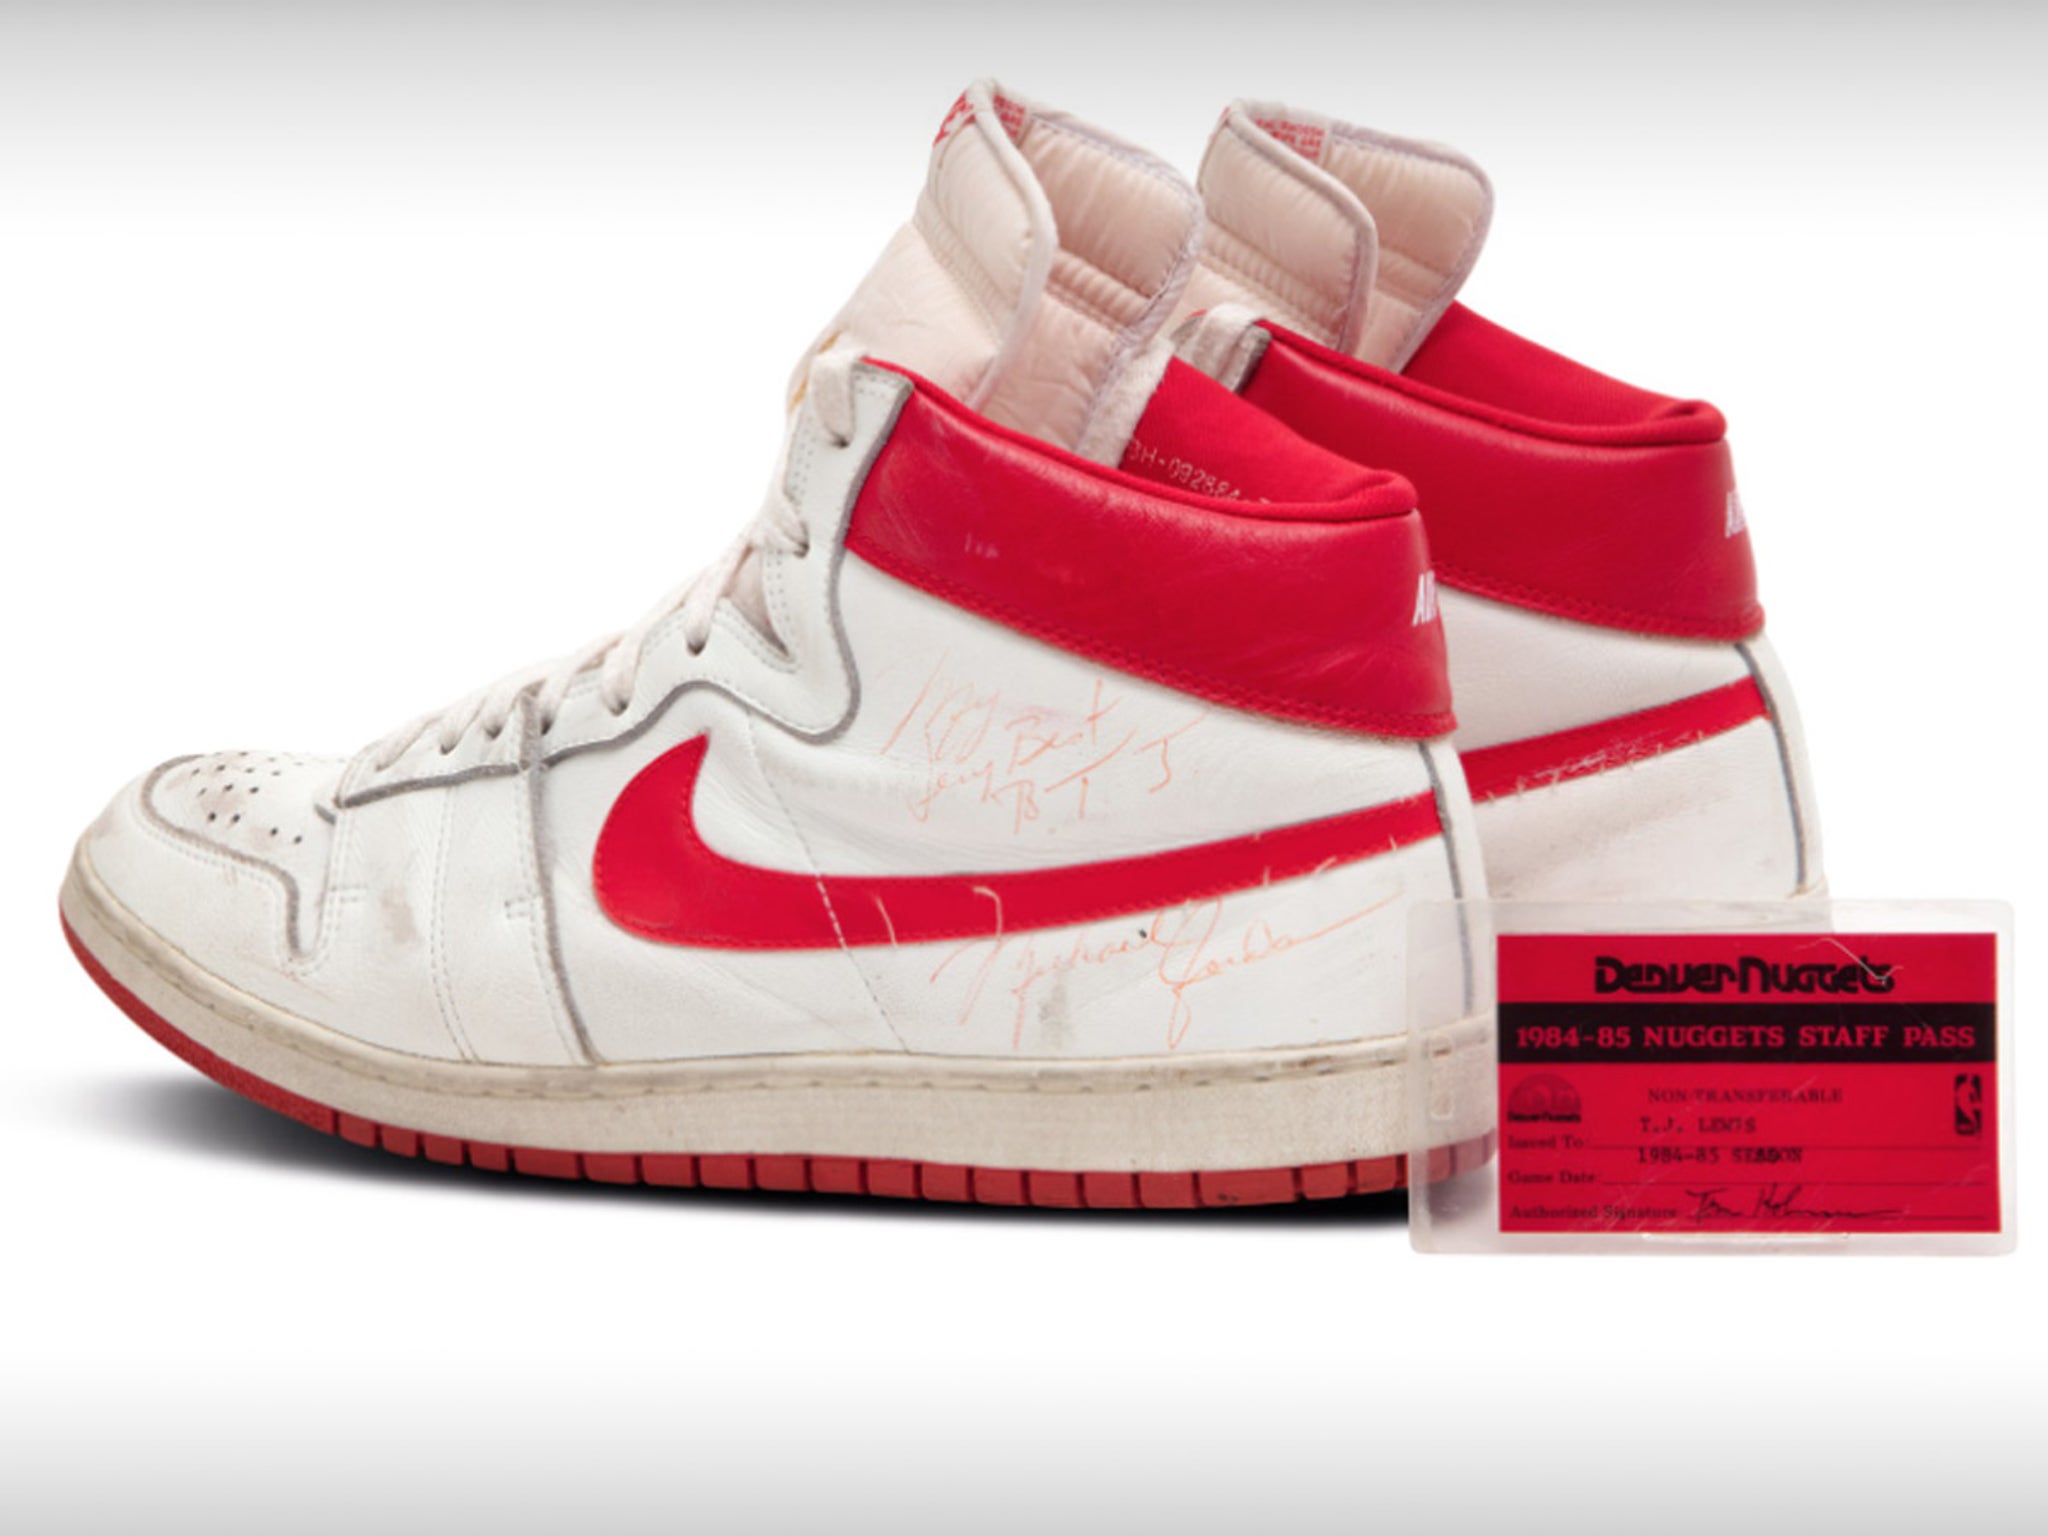 Jordan's & Signed 1984 Nikes Sell For Record $1.4 Million